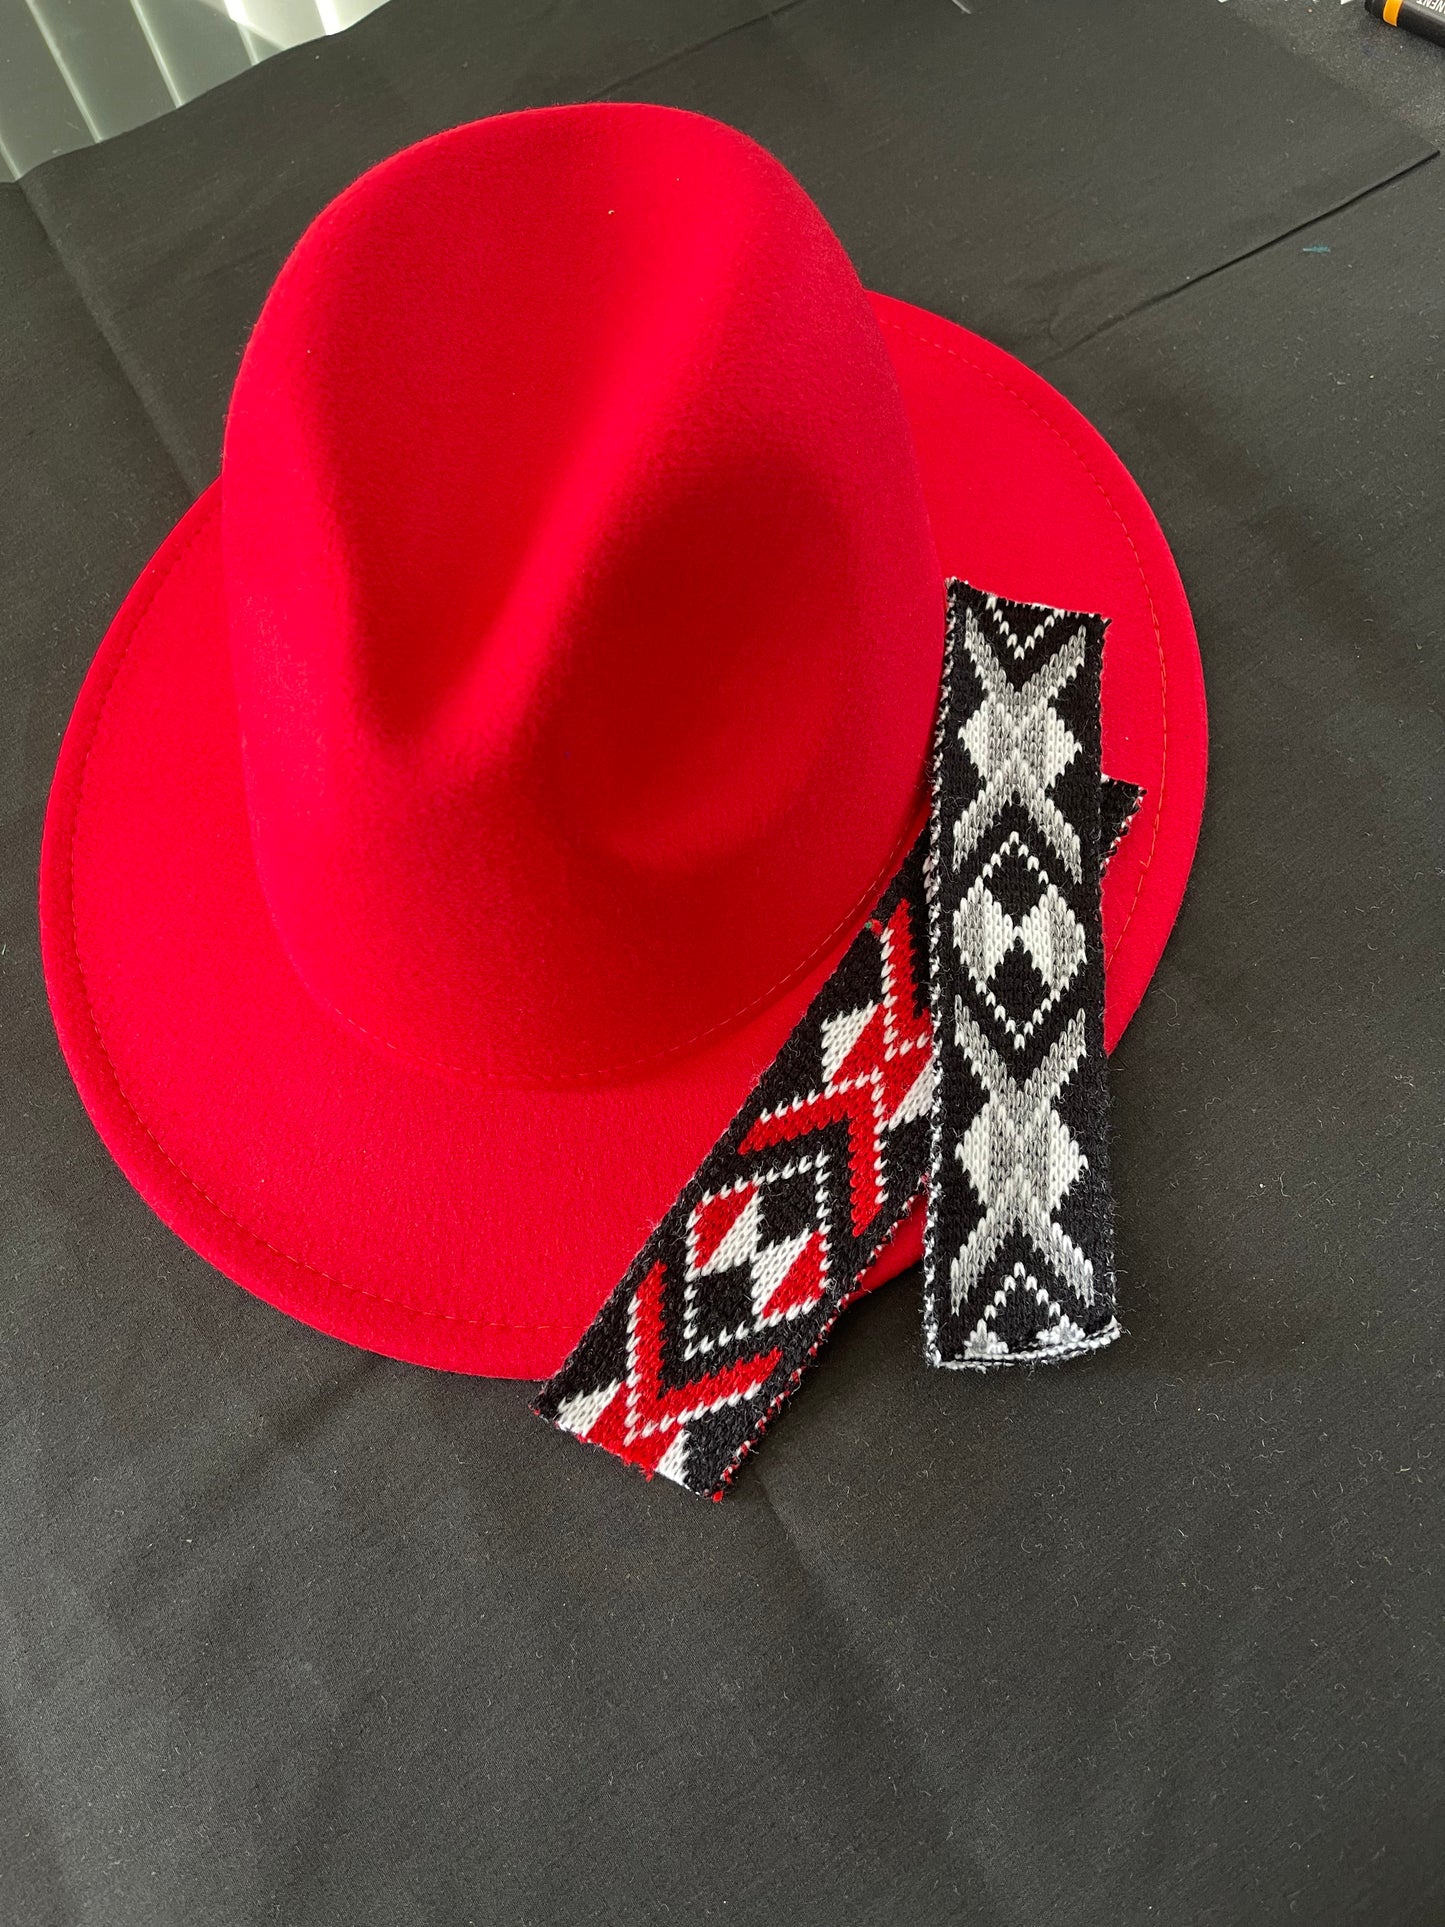 Potae - Red Fedora Hat and Band